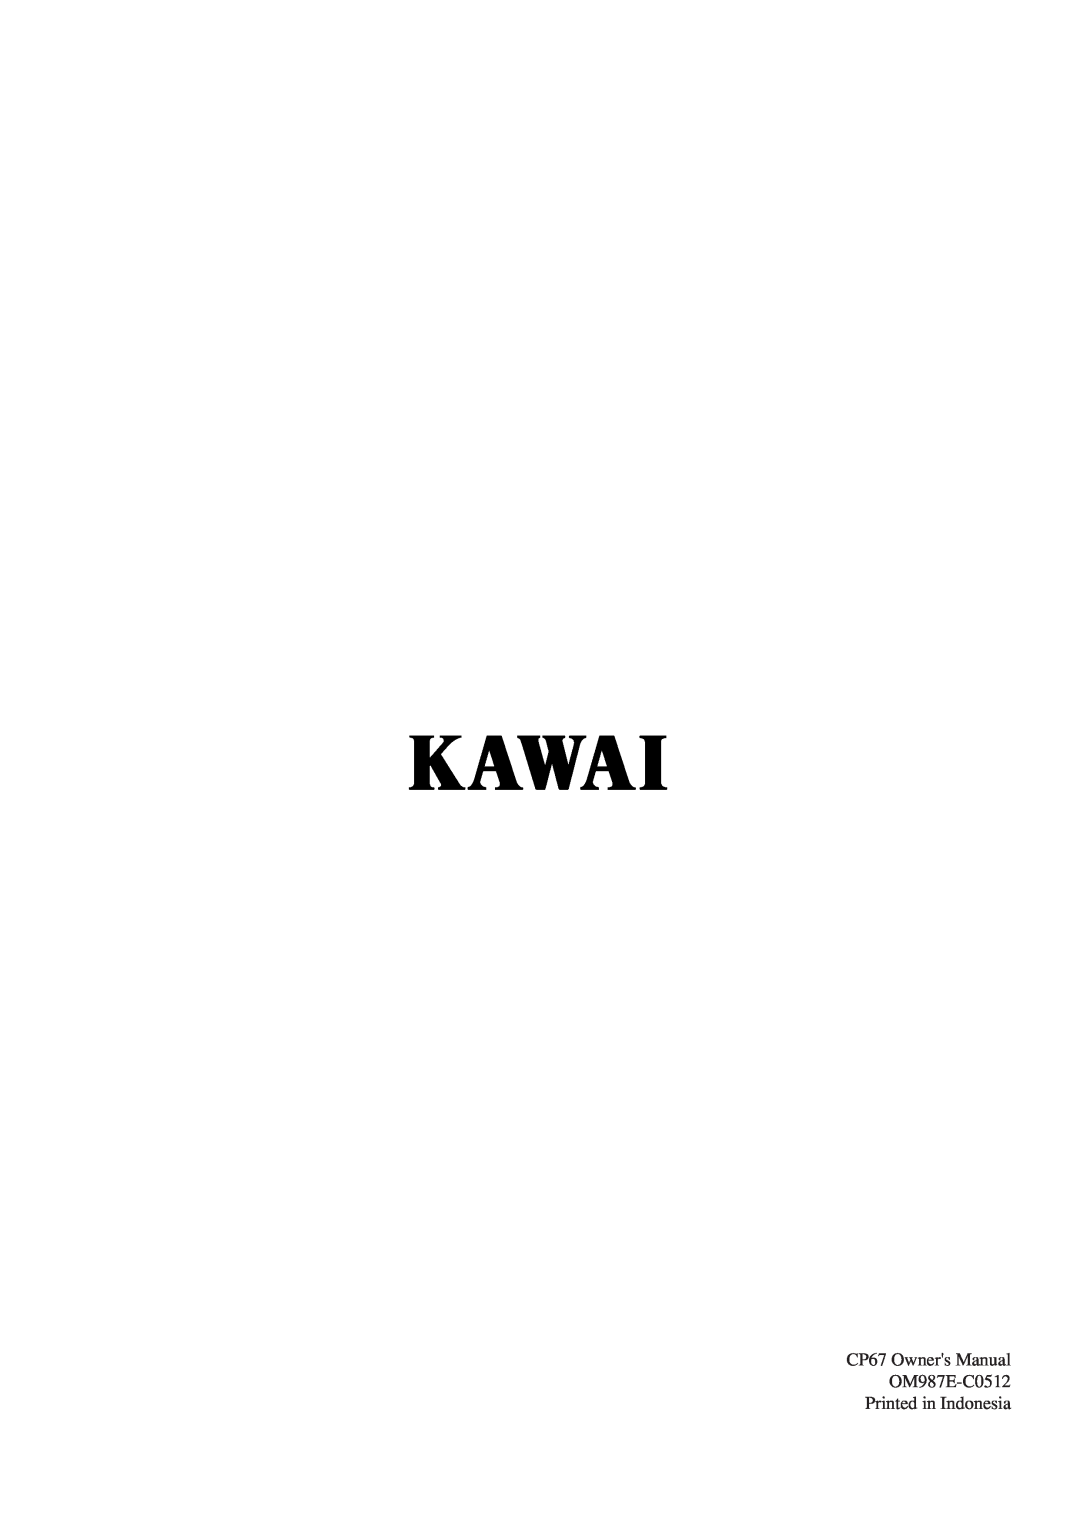 Kawai manual CP67 Owners Manual OM987E-C0512 Printed in Indonesia 